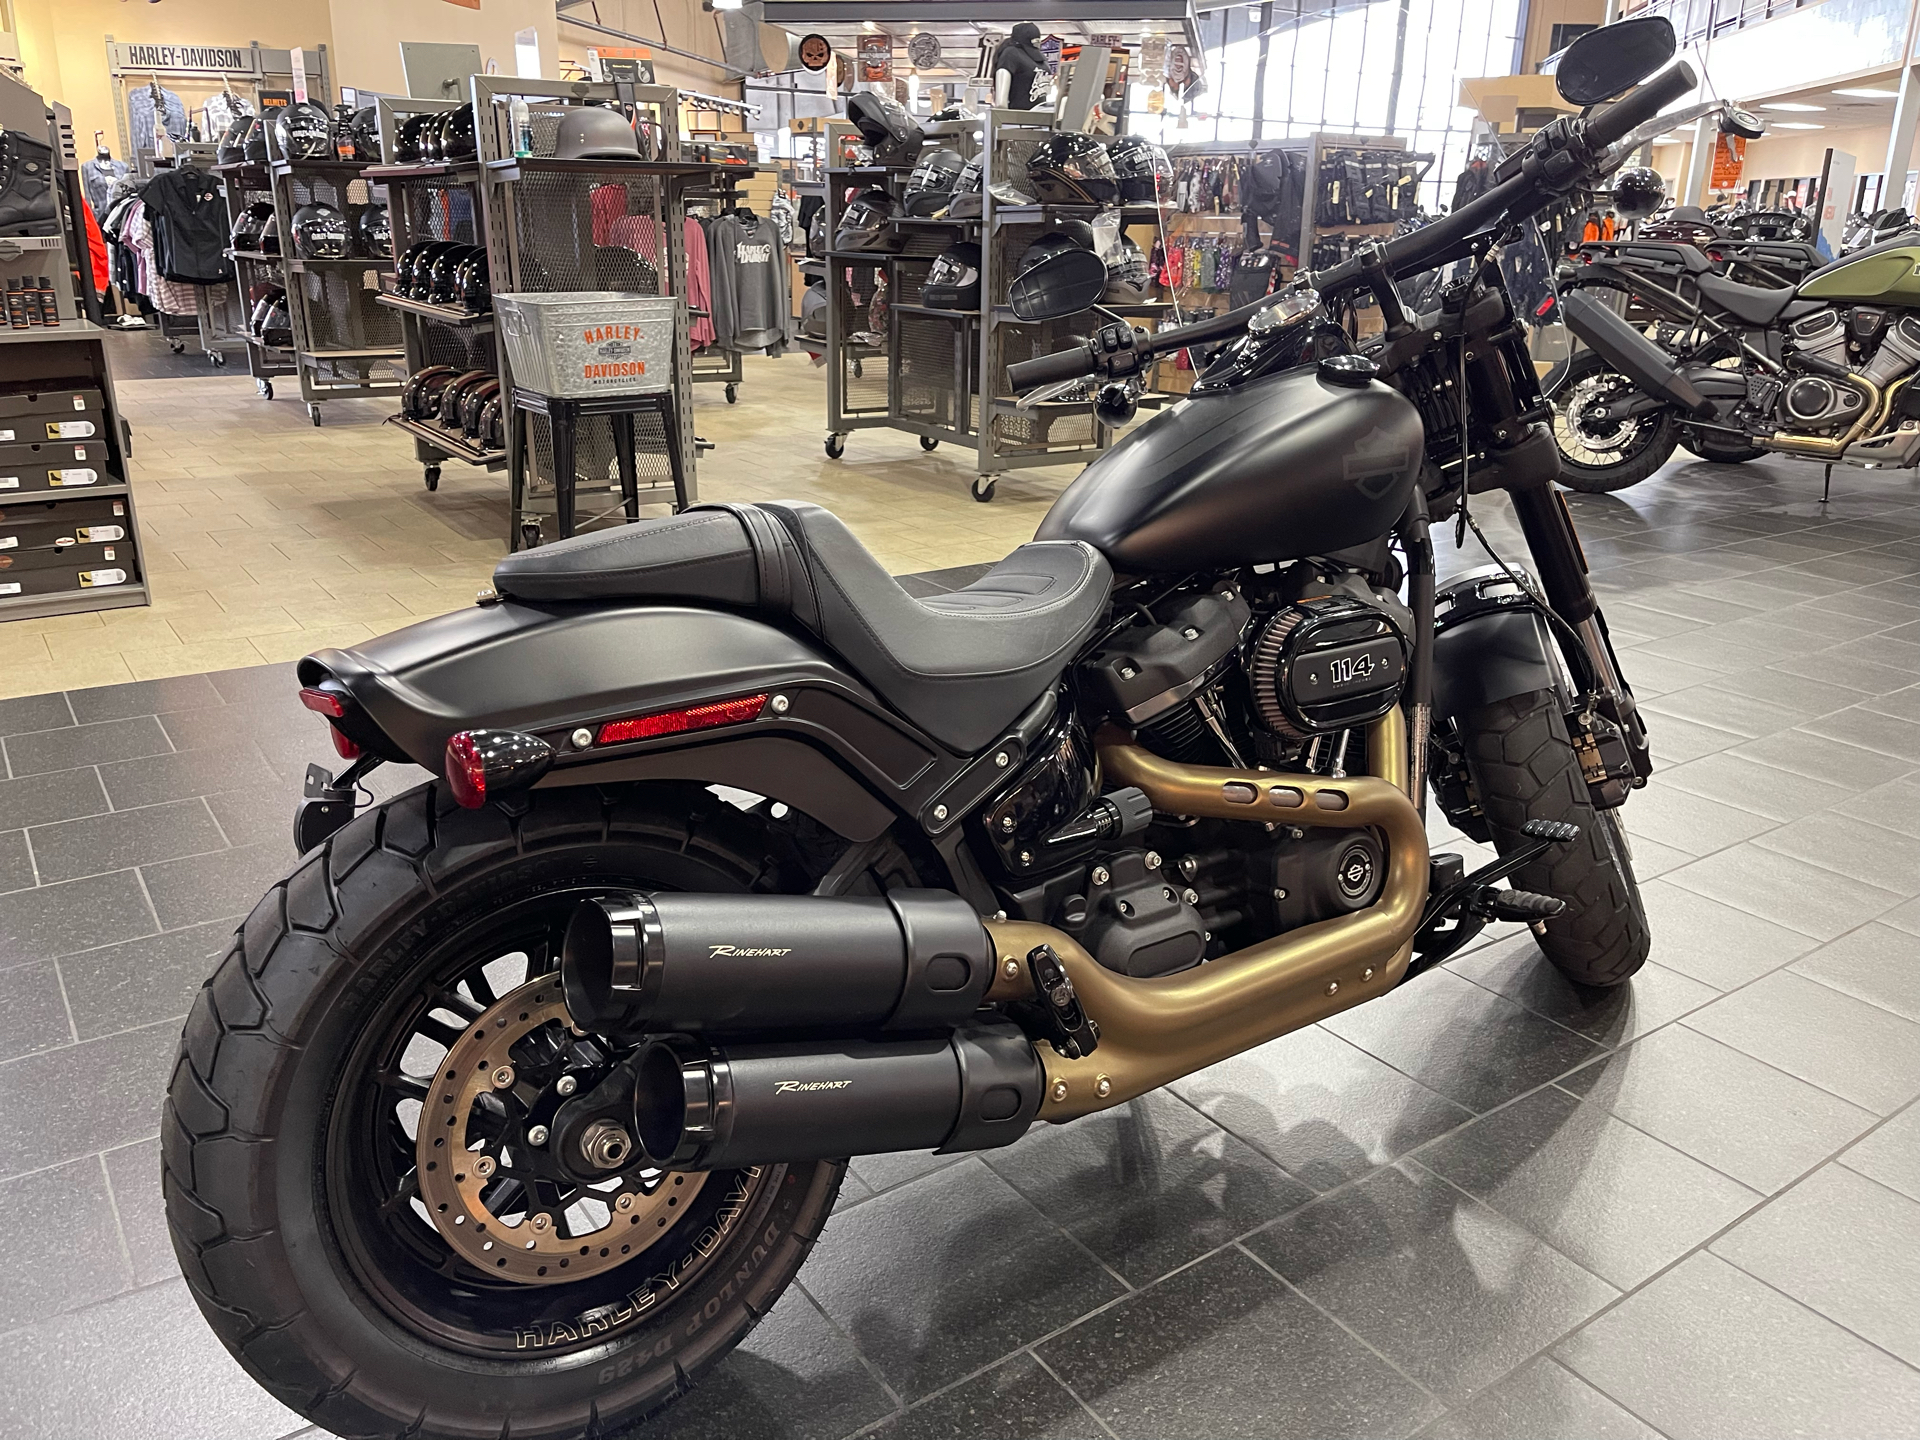 2019 Harley-Davidson Fat Bob® 114 in The Woodlands, Texas - Photo 6